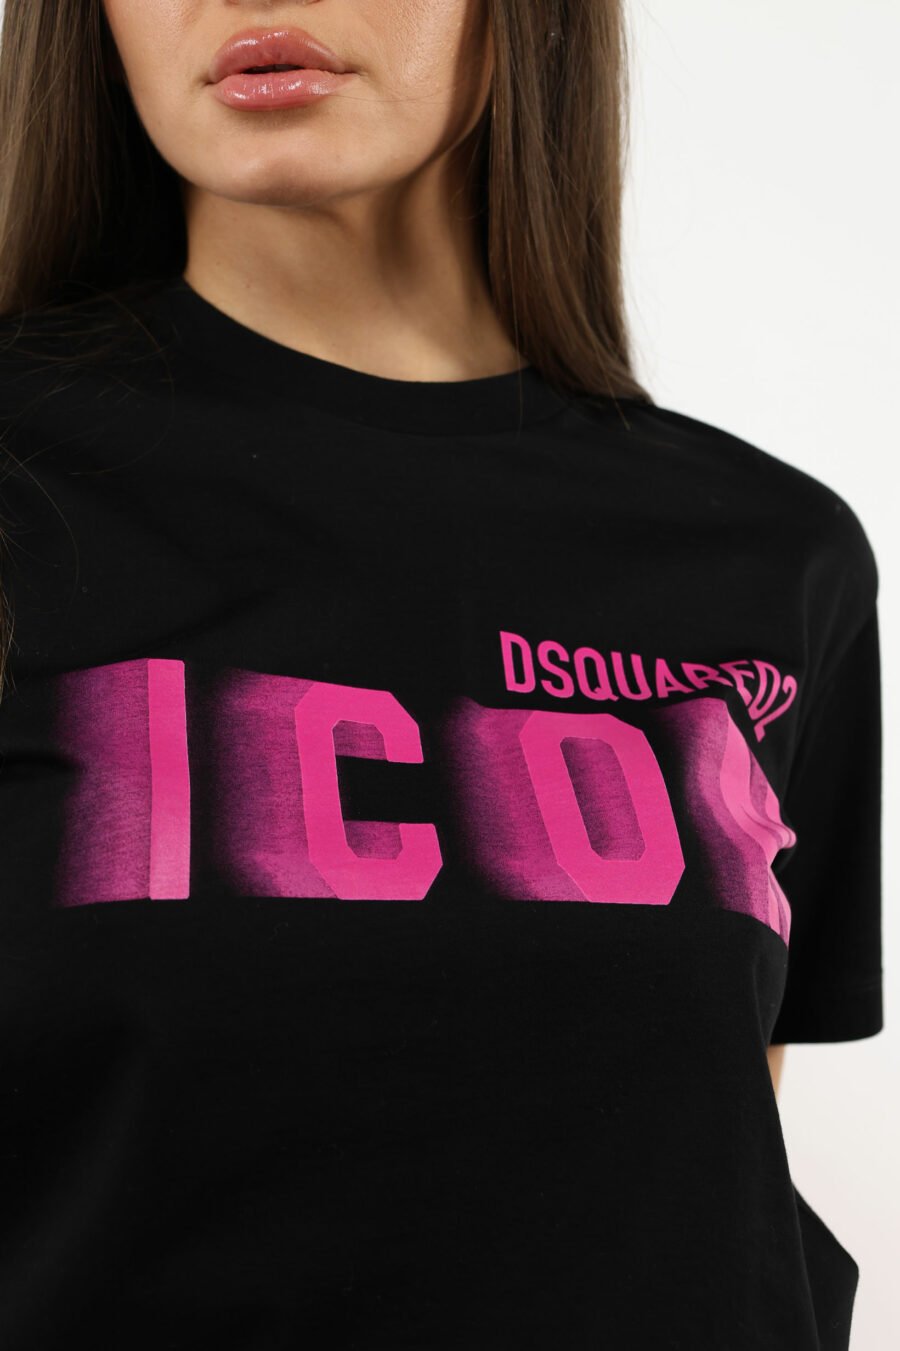 Camiseta negra con logo fucsia neon borroso - 109784